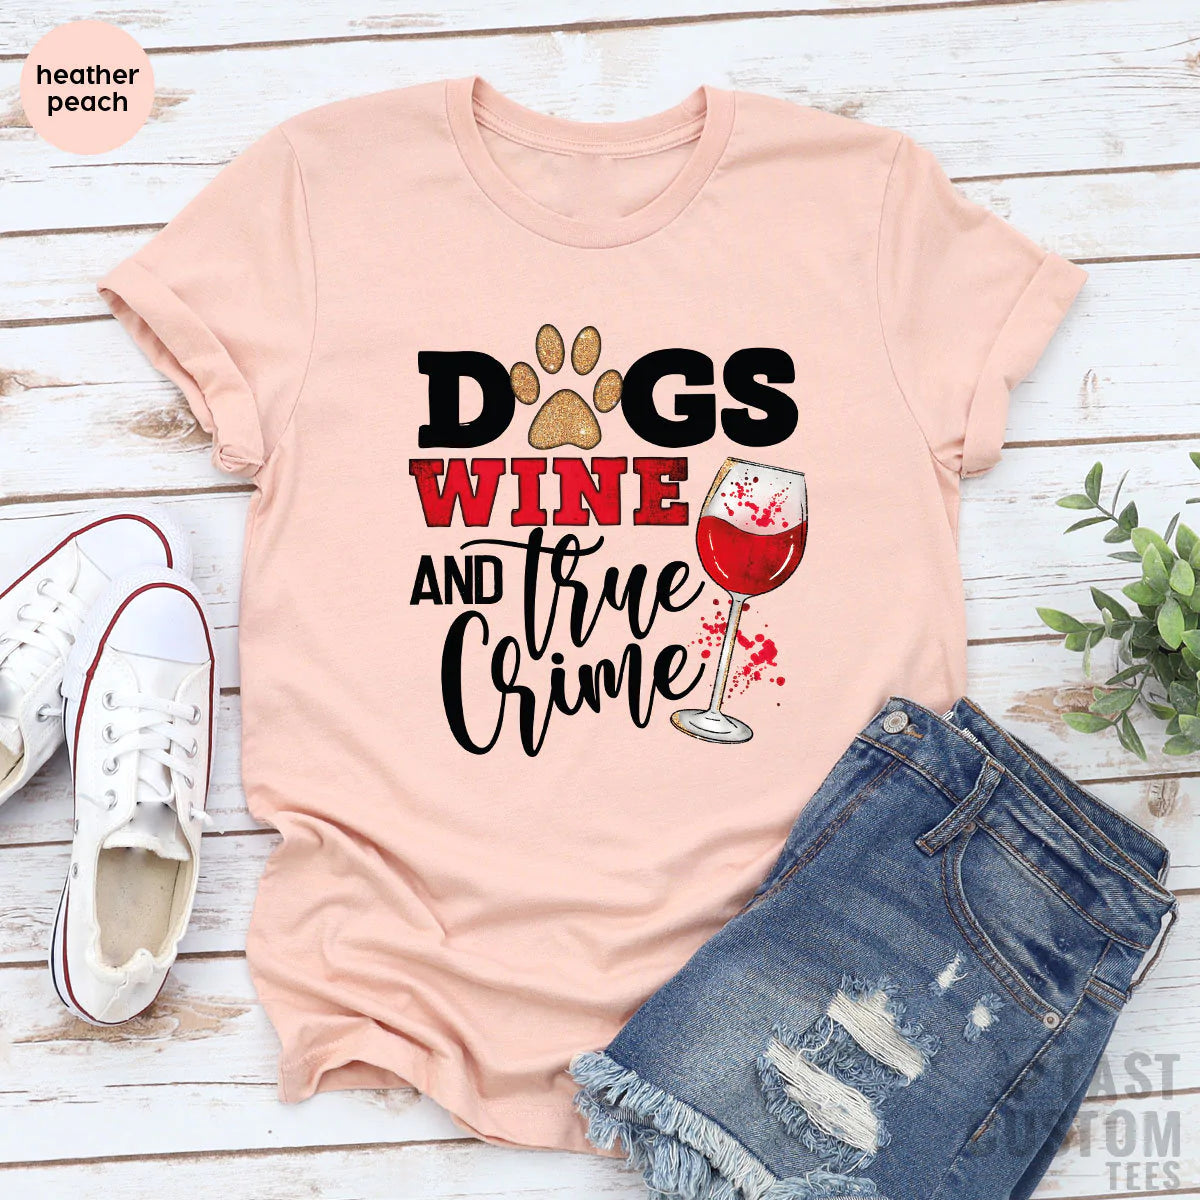 Dog Love Shirts, Dog Lover Shirts, Funny Dog Lover Tees